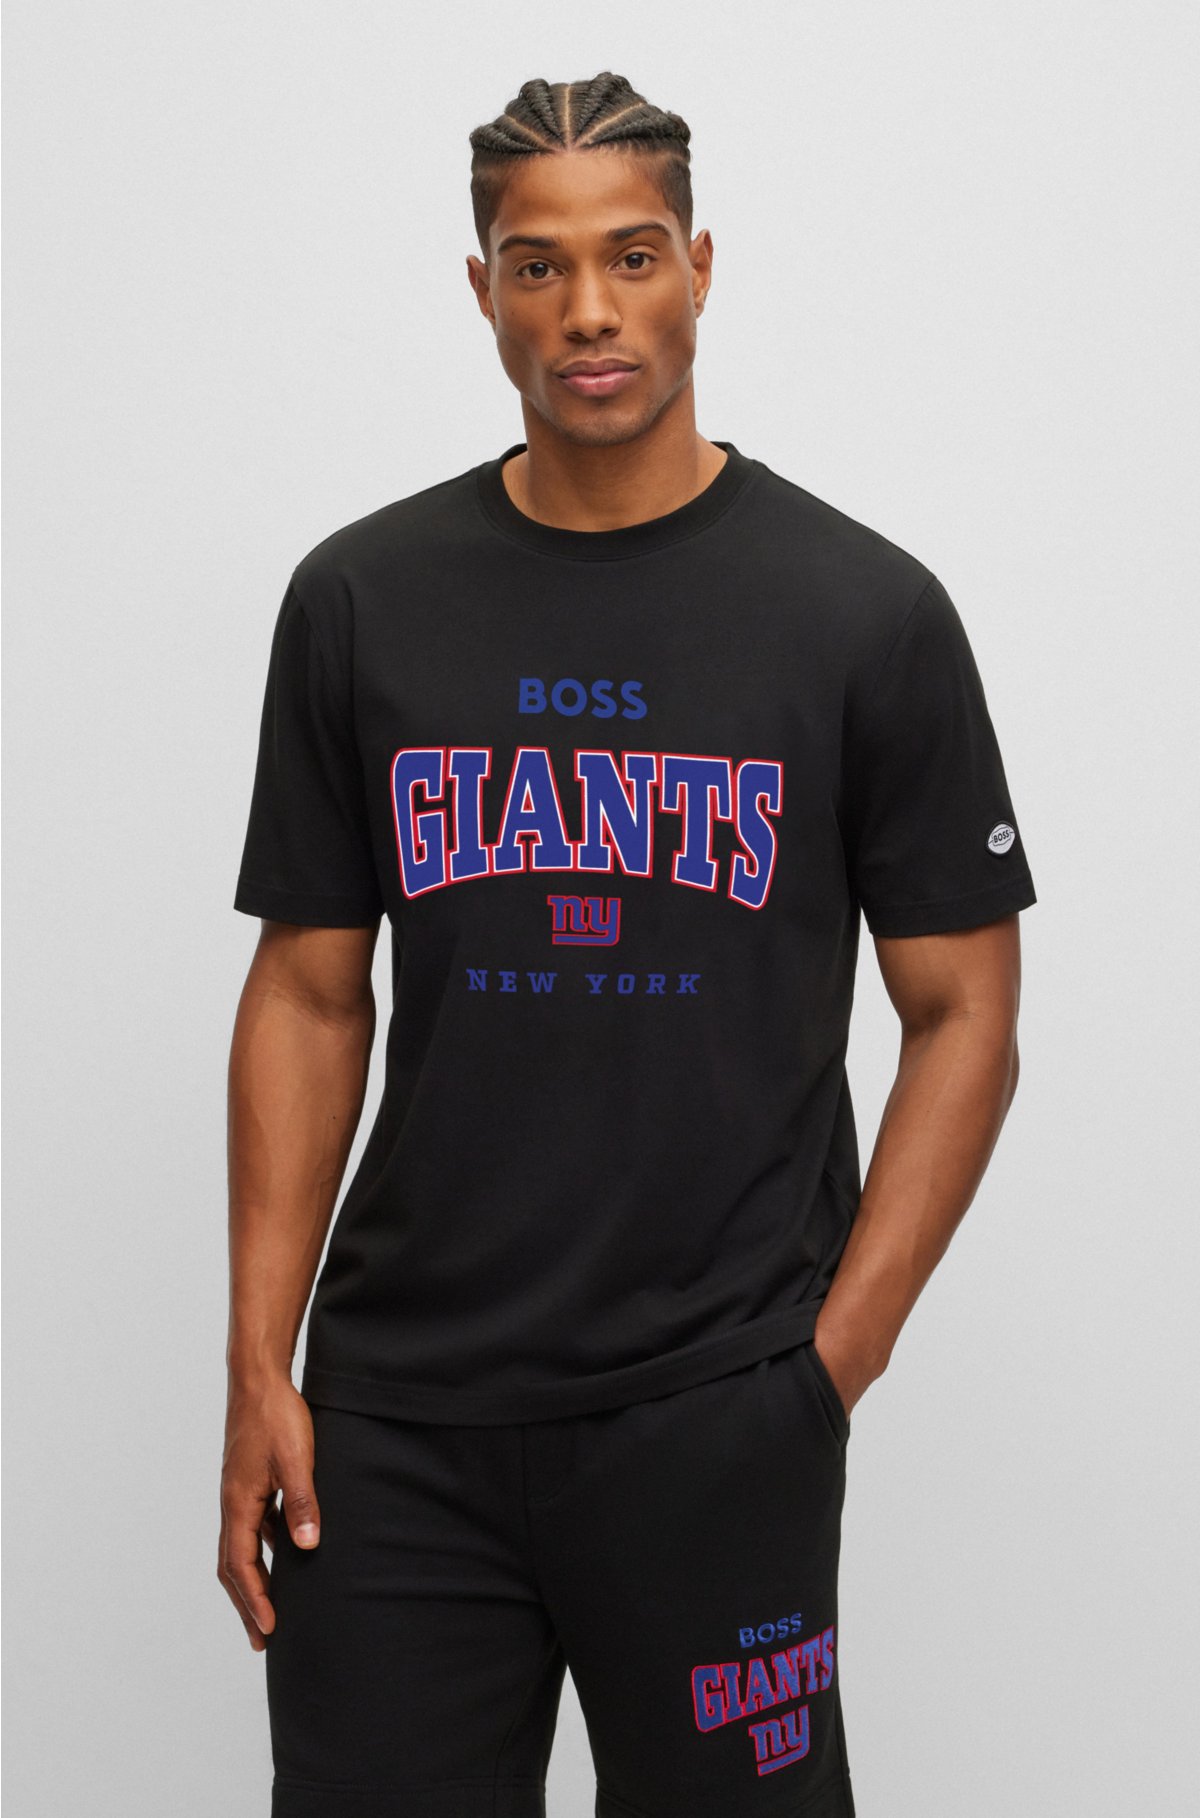 NFL Team Apparel Woman XL Blue Sleep Wear Pants NY Giants NYC